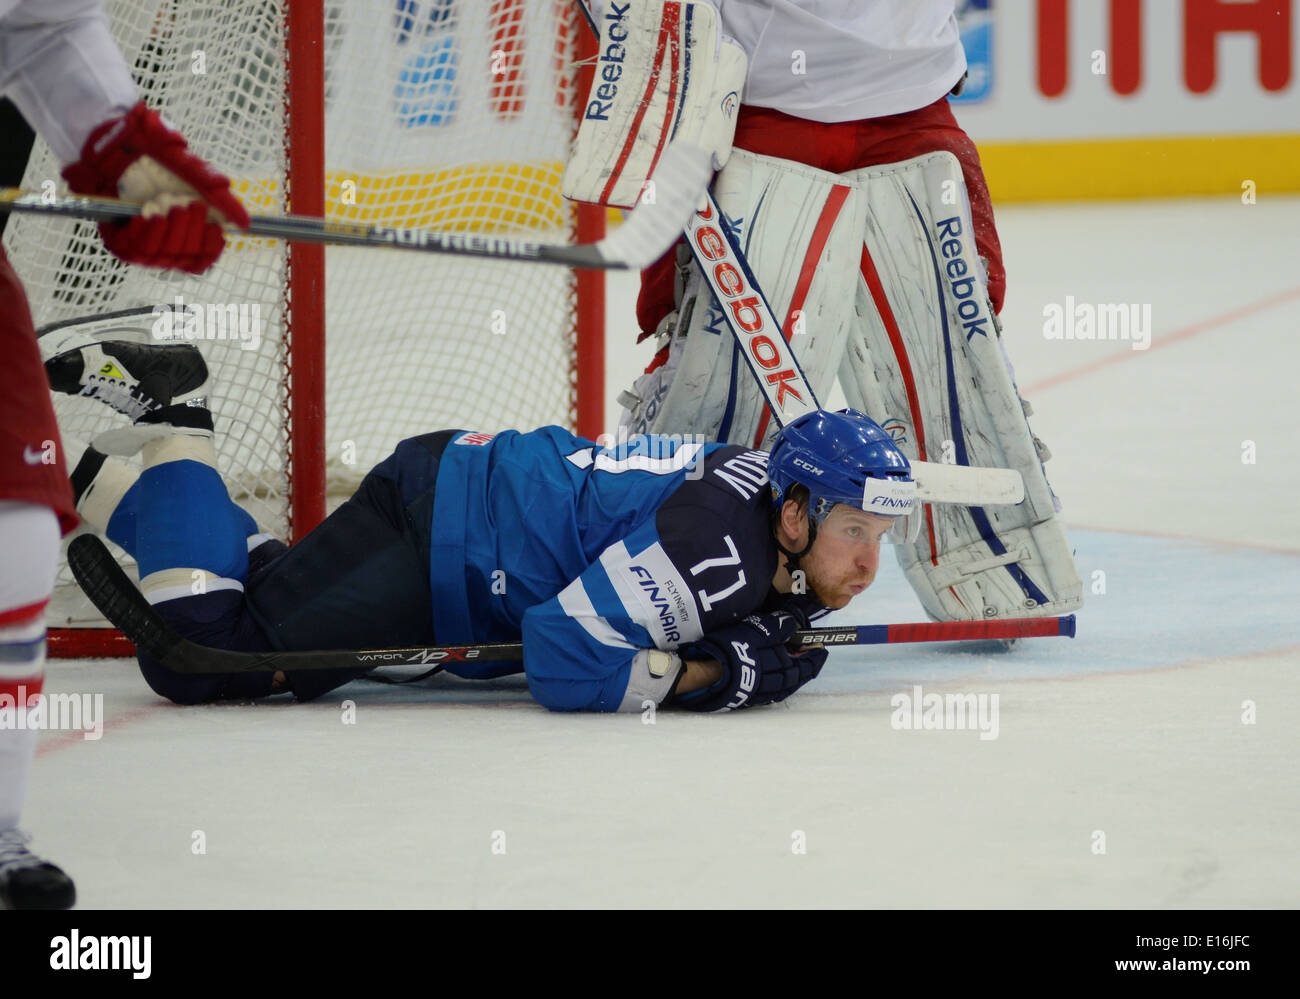 KOMAROV Leo (71) of Finland during 2014 IIHF World Ice Hockey Championship semifinal match at Minsk Arena Stock Photo